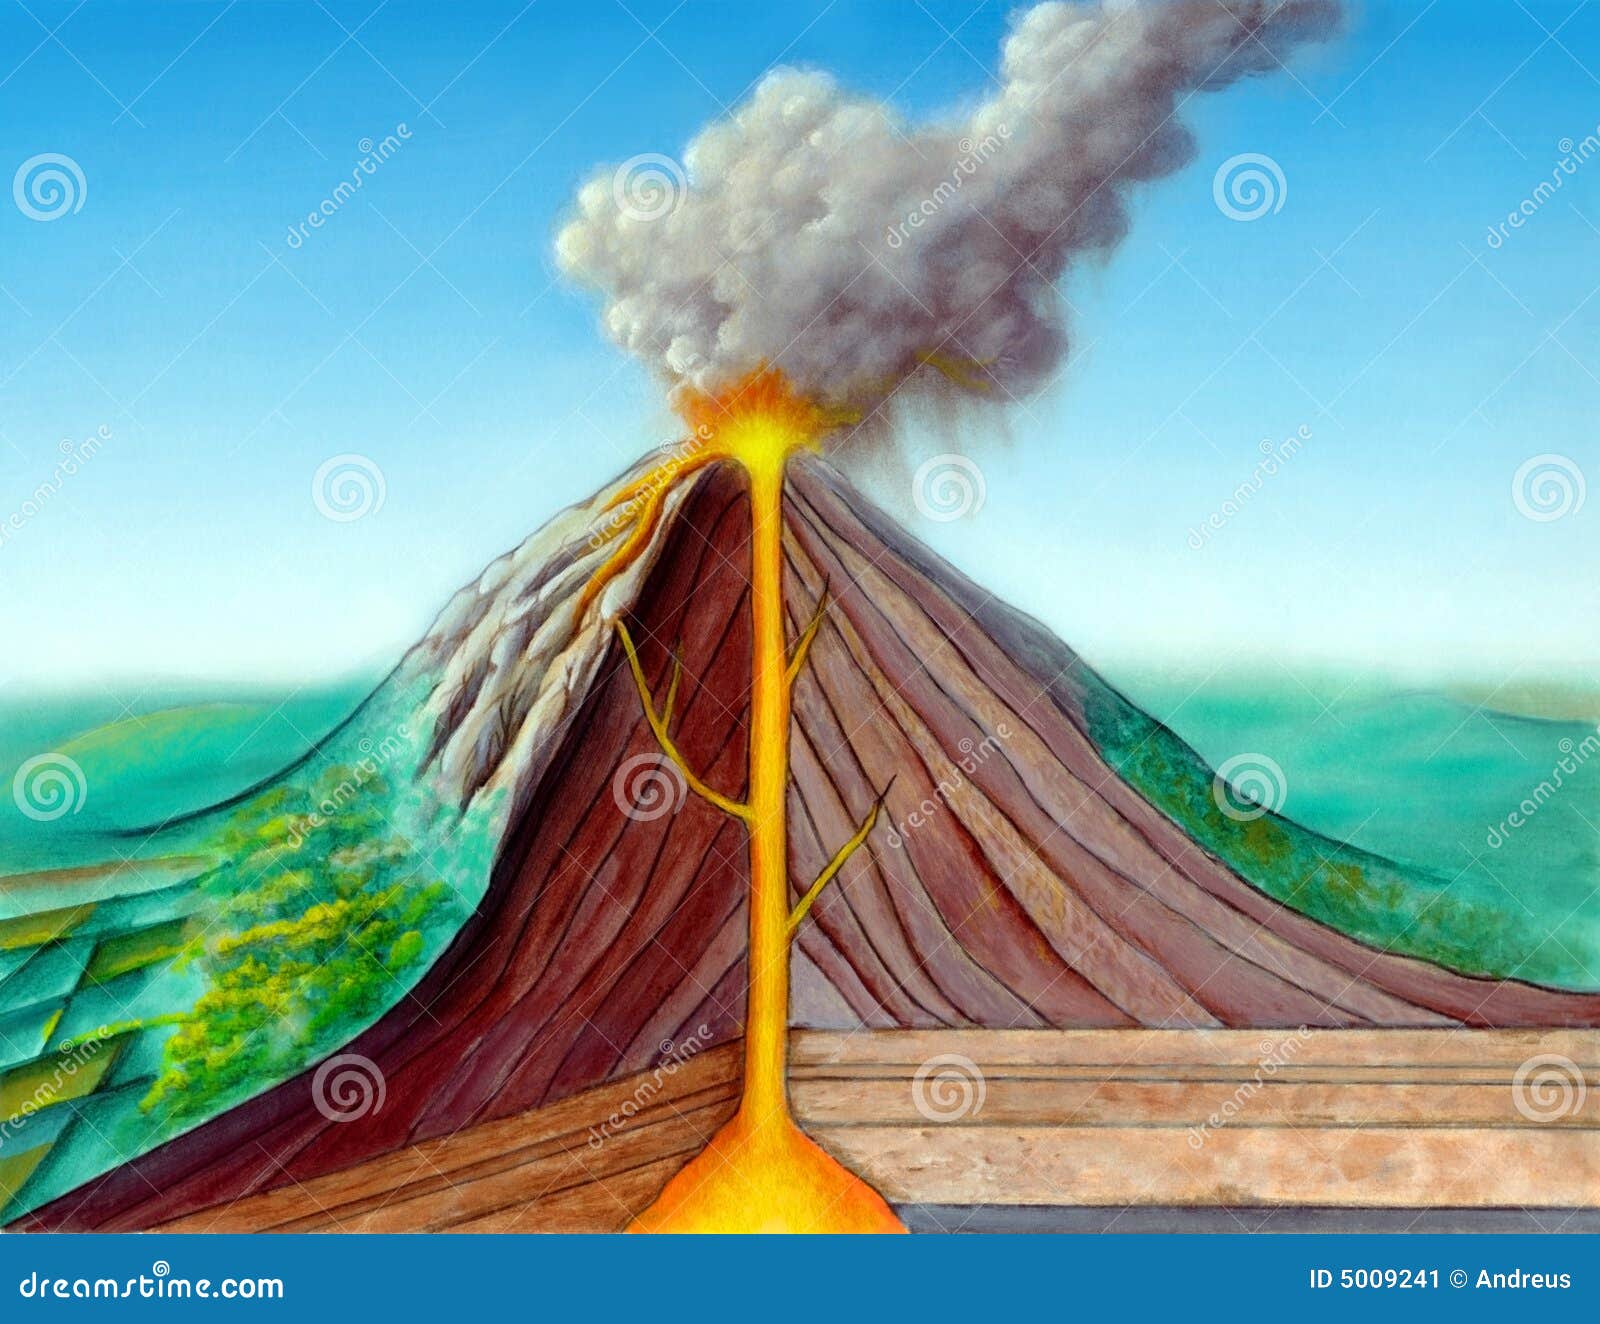 volcano structure